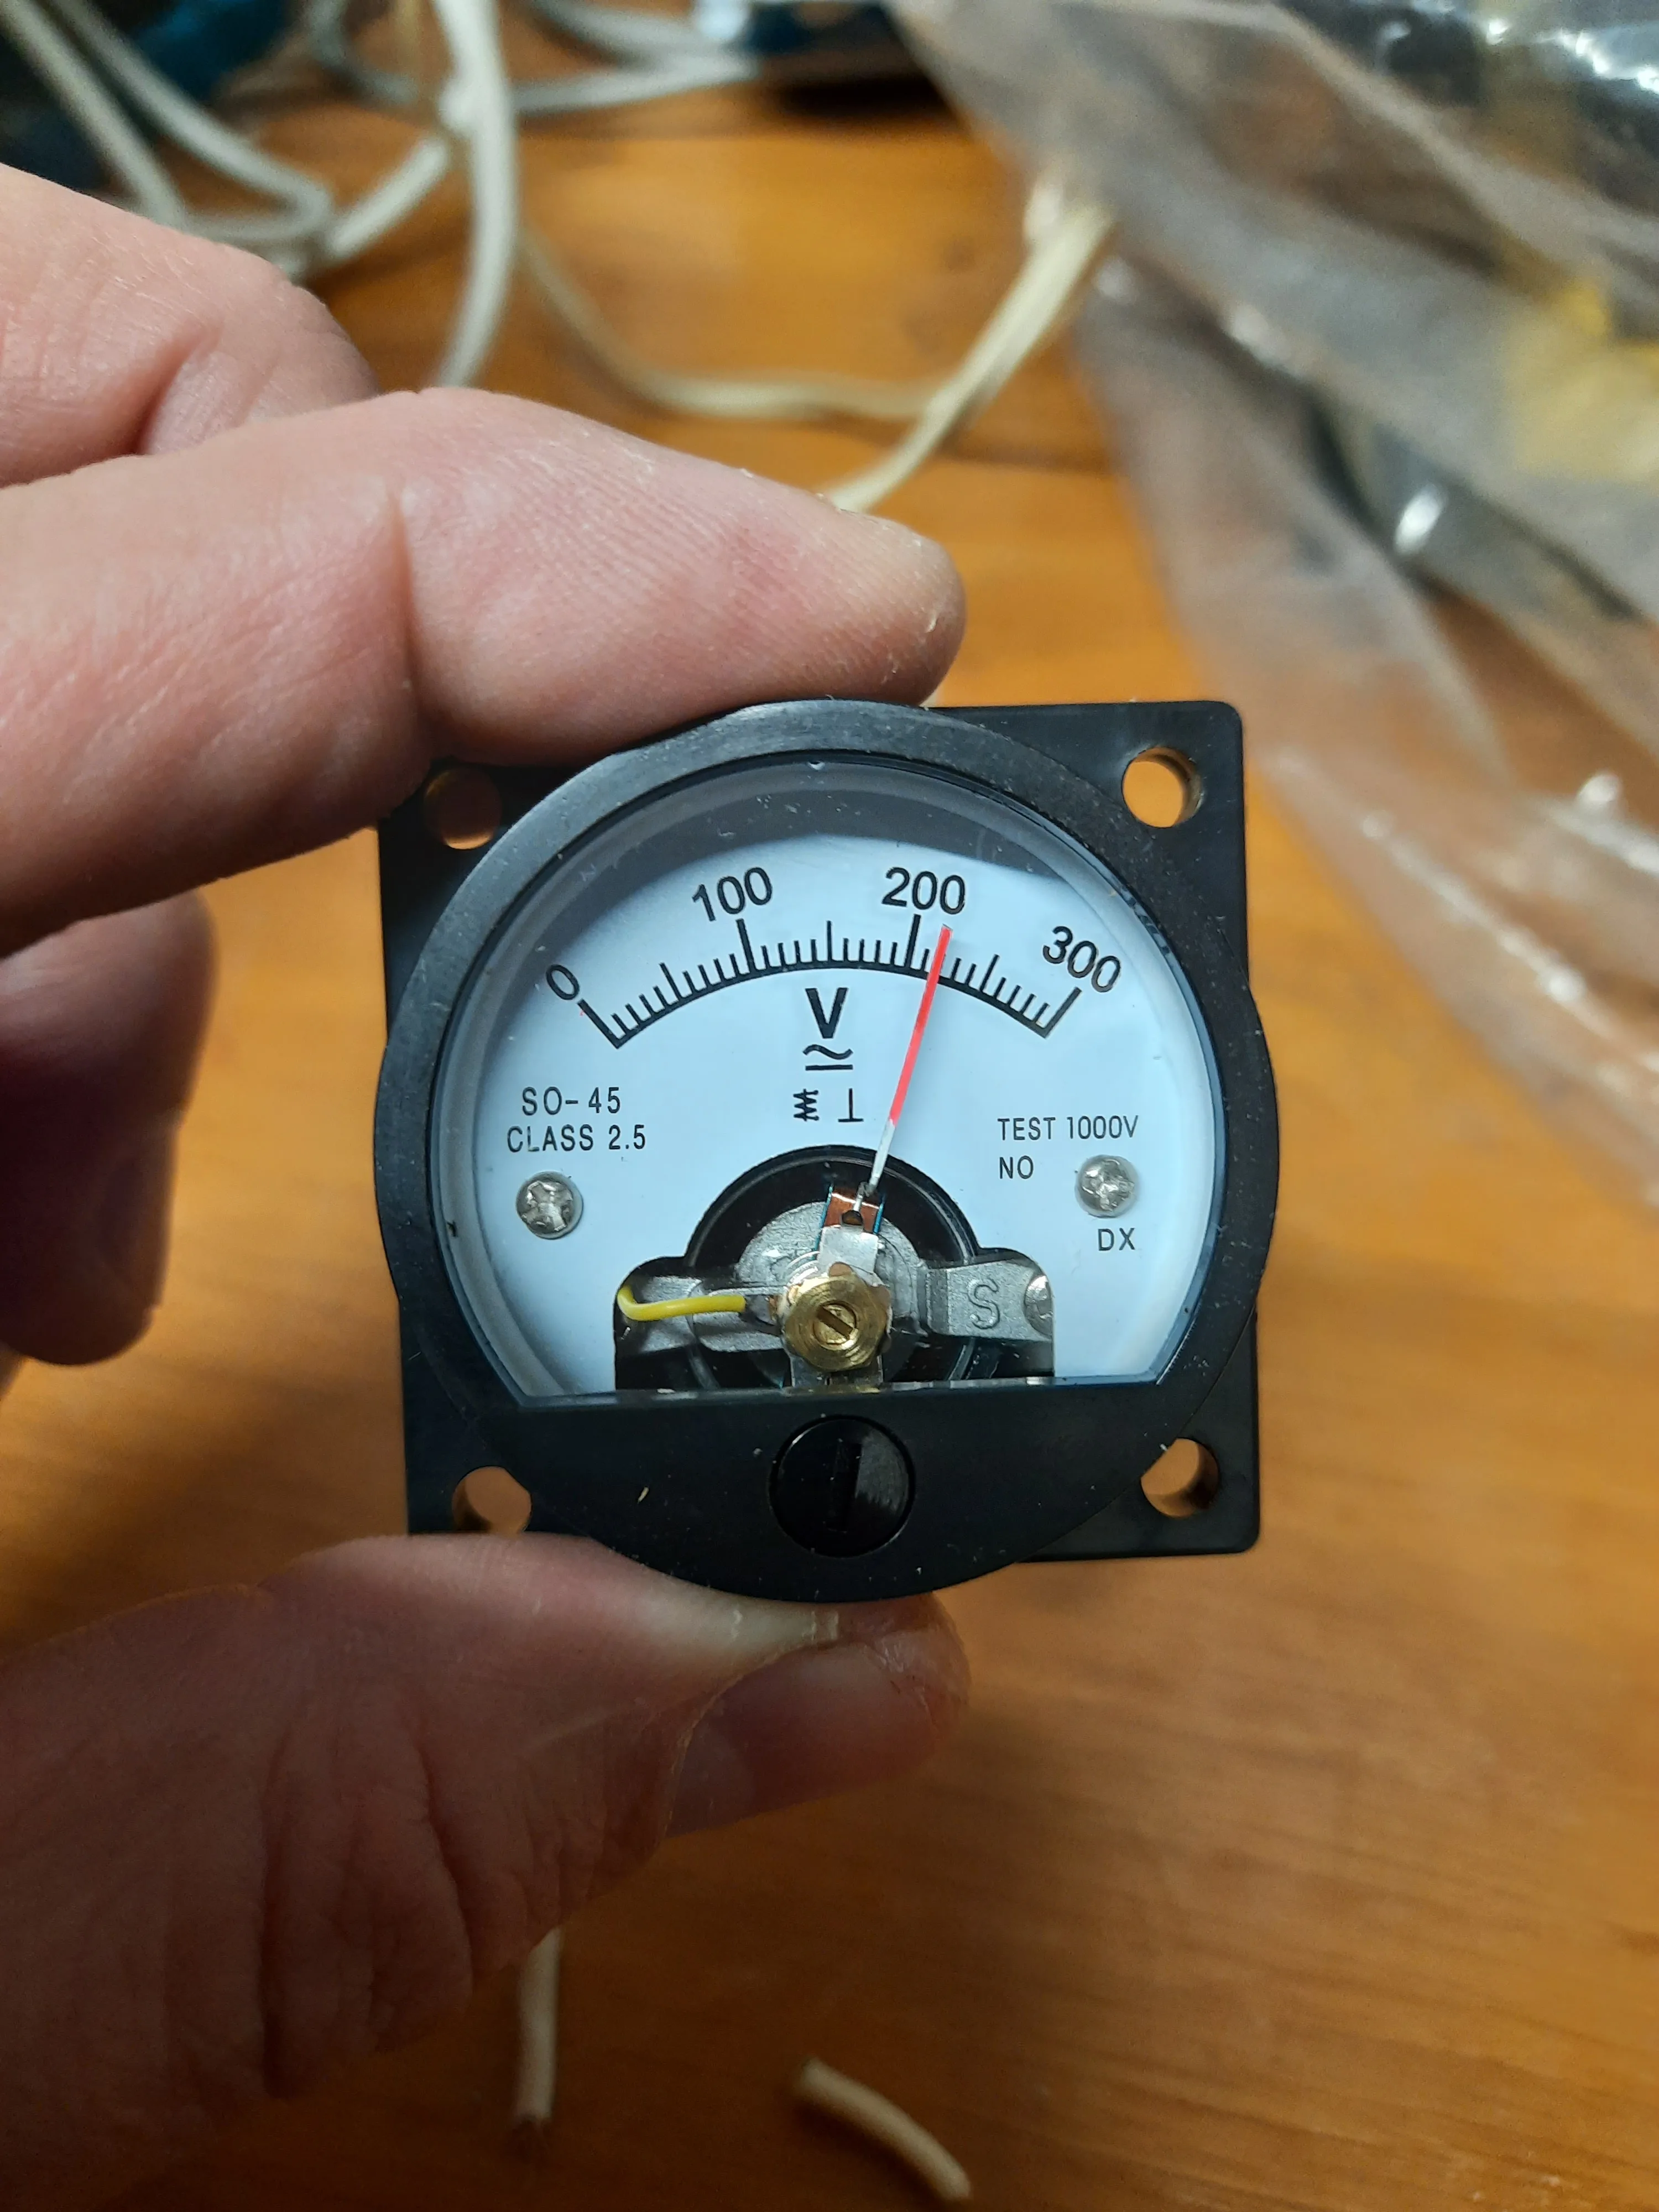 3X Hot Sale! Black AC 0-300V Round Analog Dial Panel Meter Voltmeter Gauge D1P9 